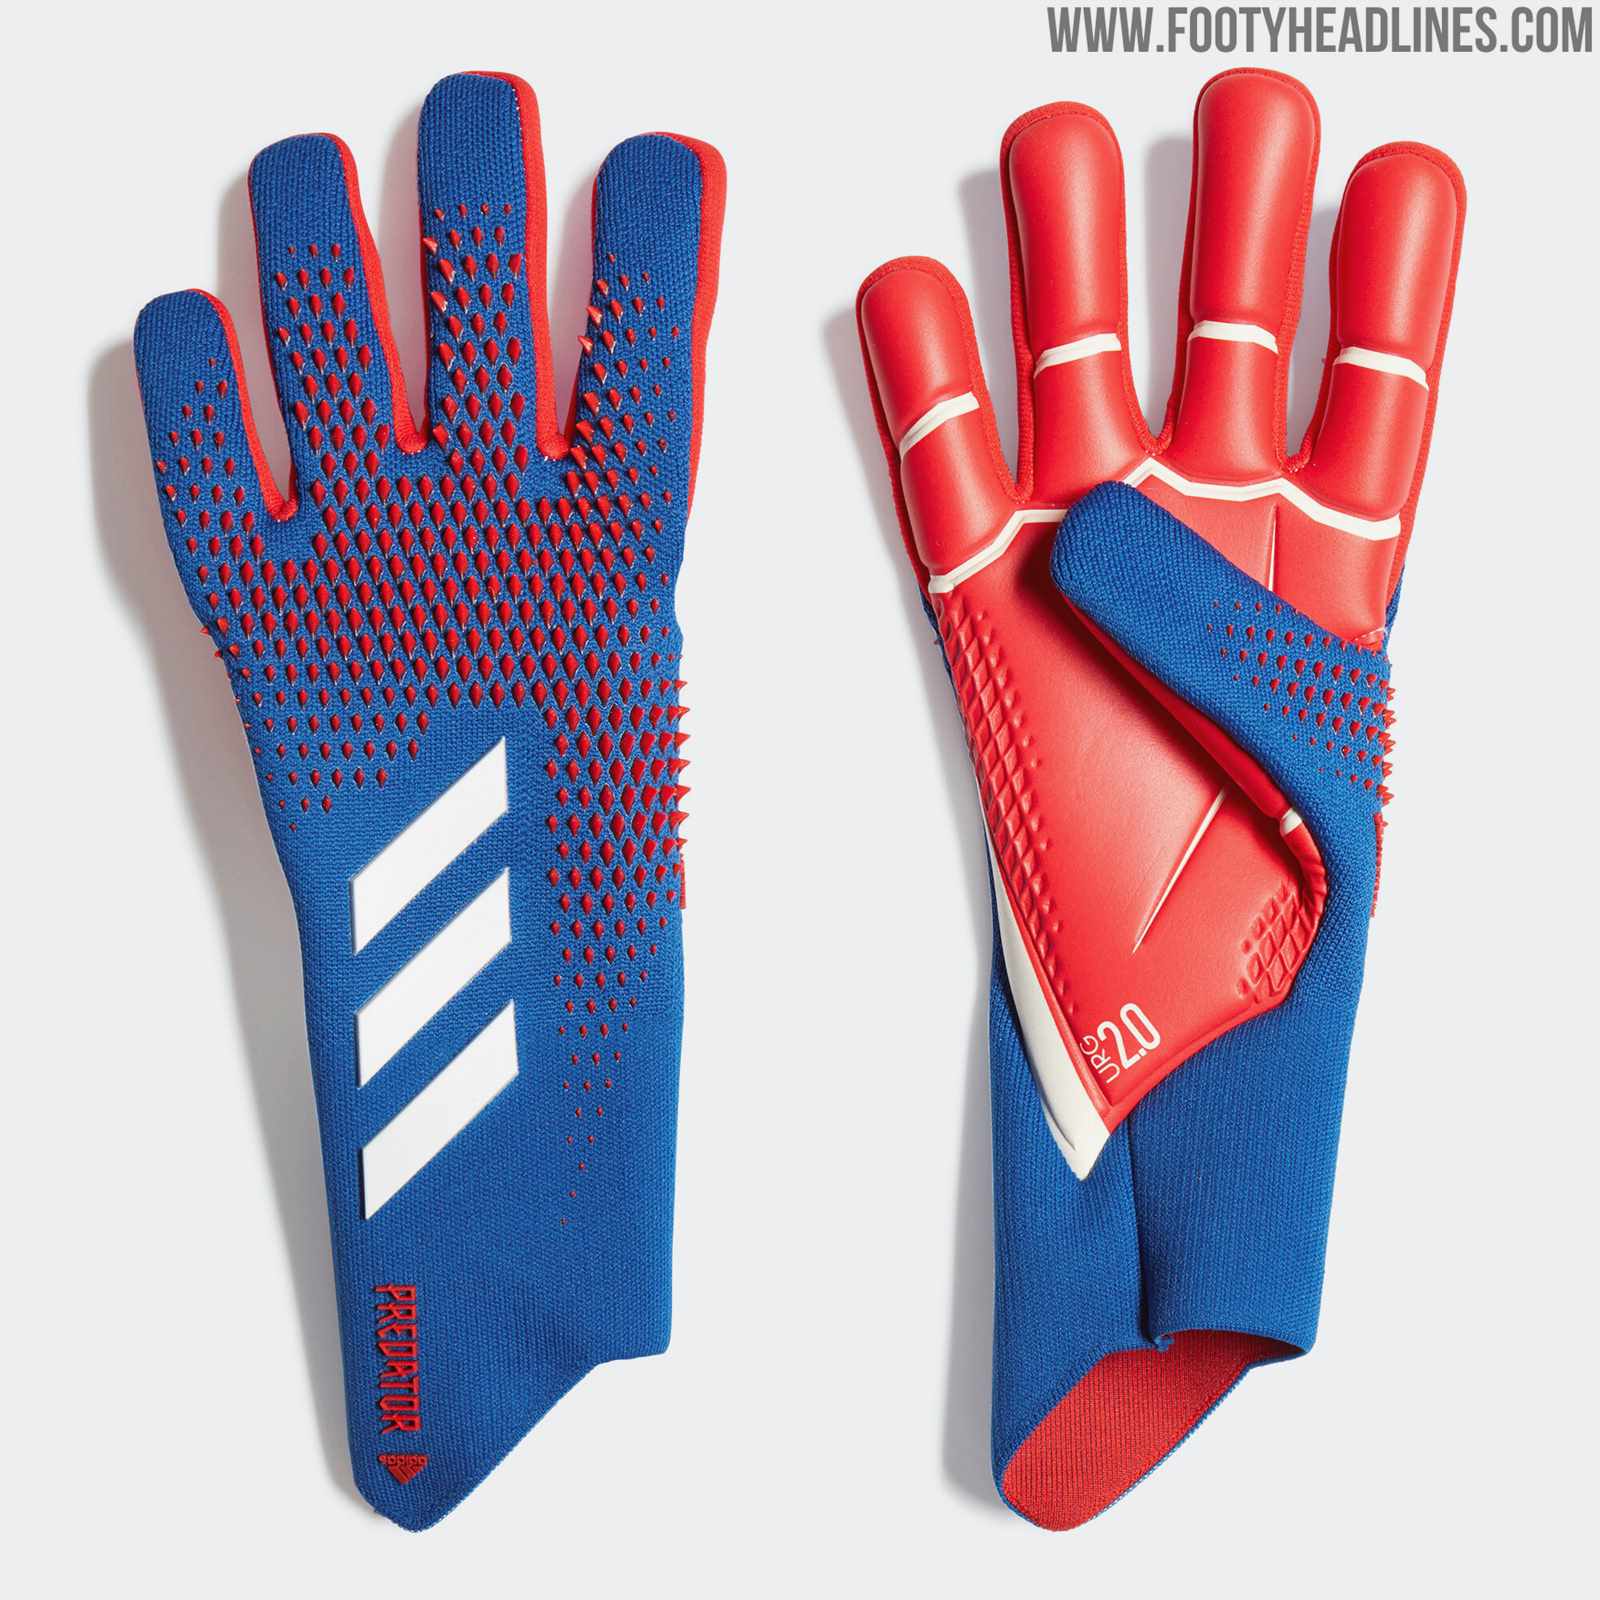 Адидас предатор перчатки. Adidas Predator Gloves 2020. Adidas Predator Pro goalkeeper Gloves 2020. Вратарские перчатки адидас предатор 20. Перчатки адидас предатор 20 про.